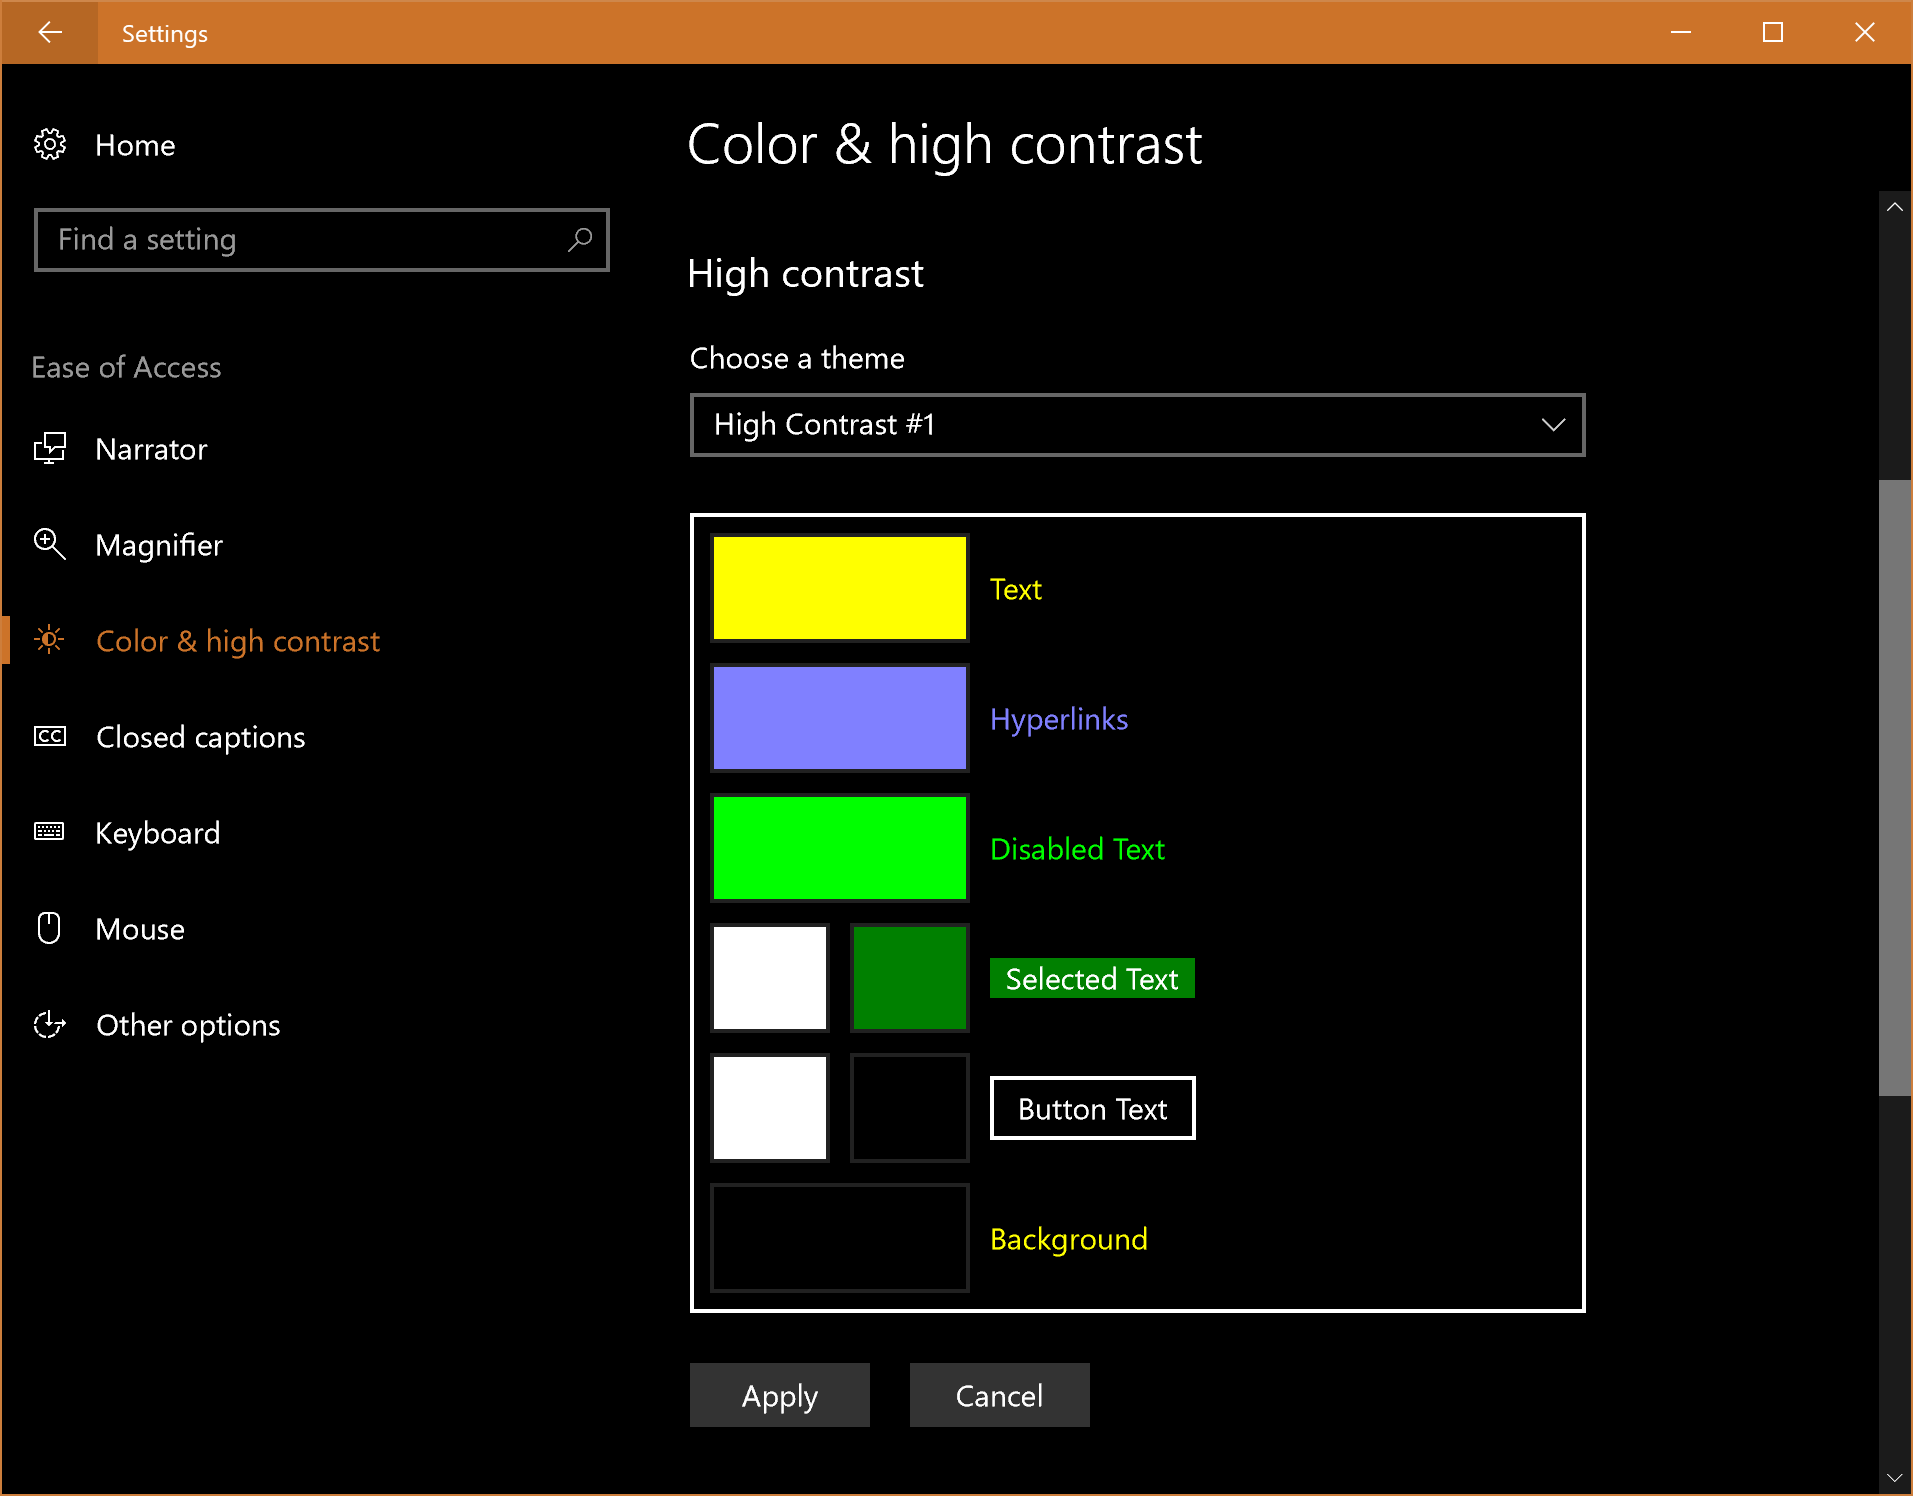 Windows 10 (Fall 2017 Creators Update) high contrast mode settings dialog.